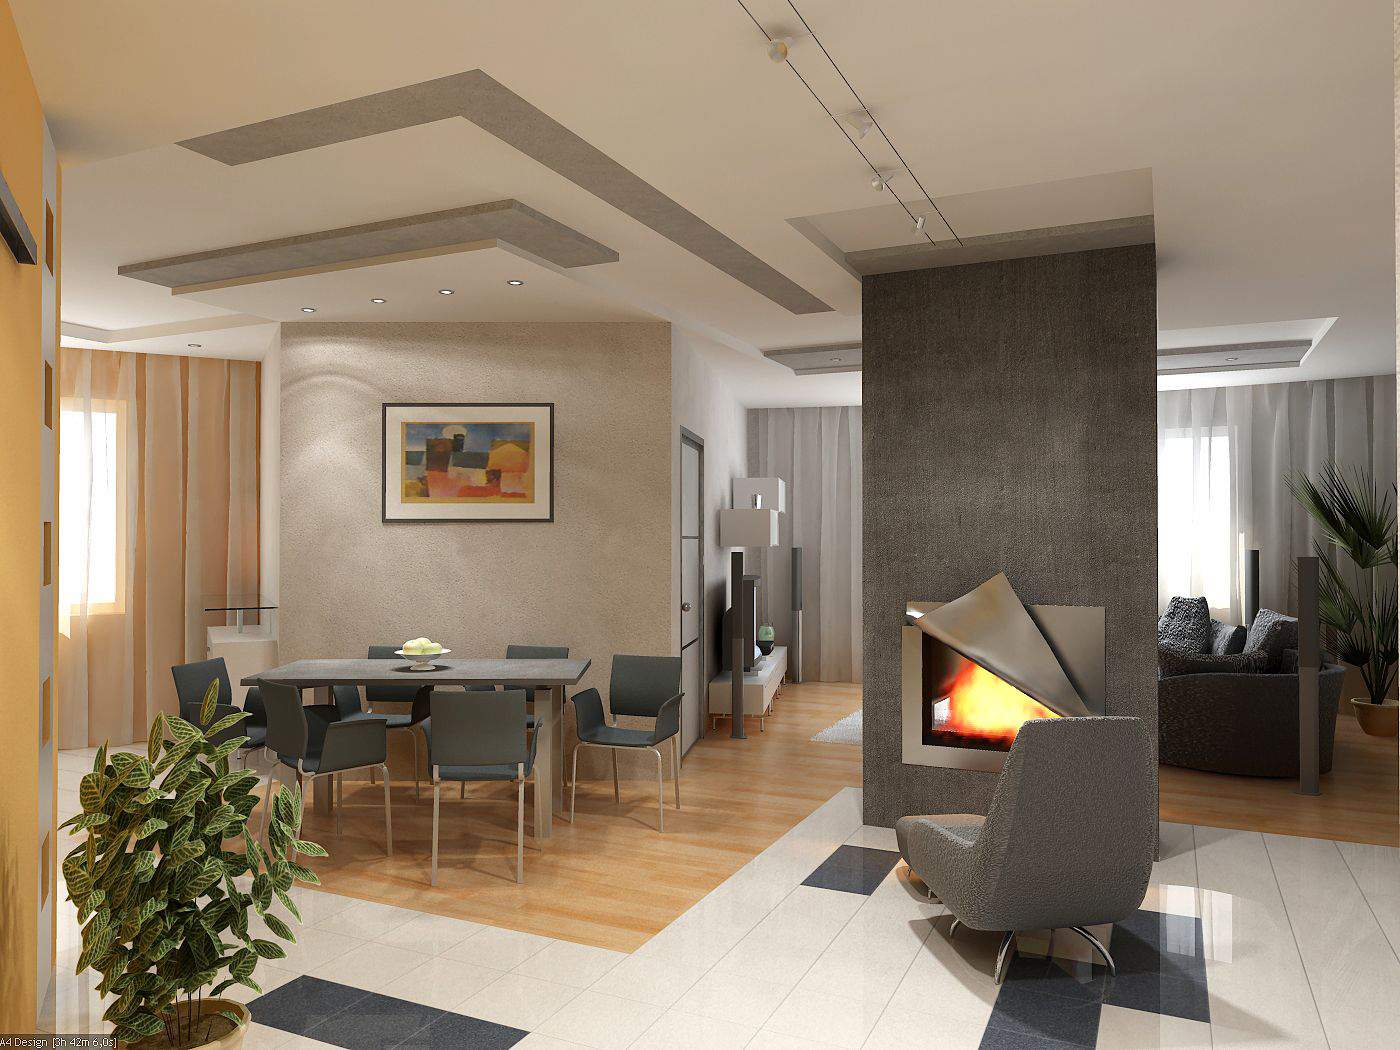 Top Modern Home Interior Design Ideas 1400 x 1050 180 kB jpeg